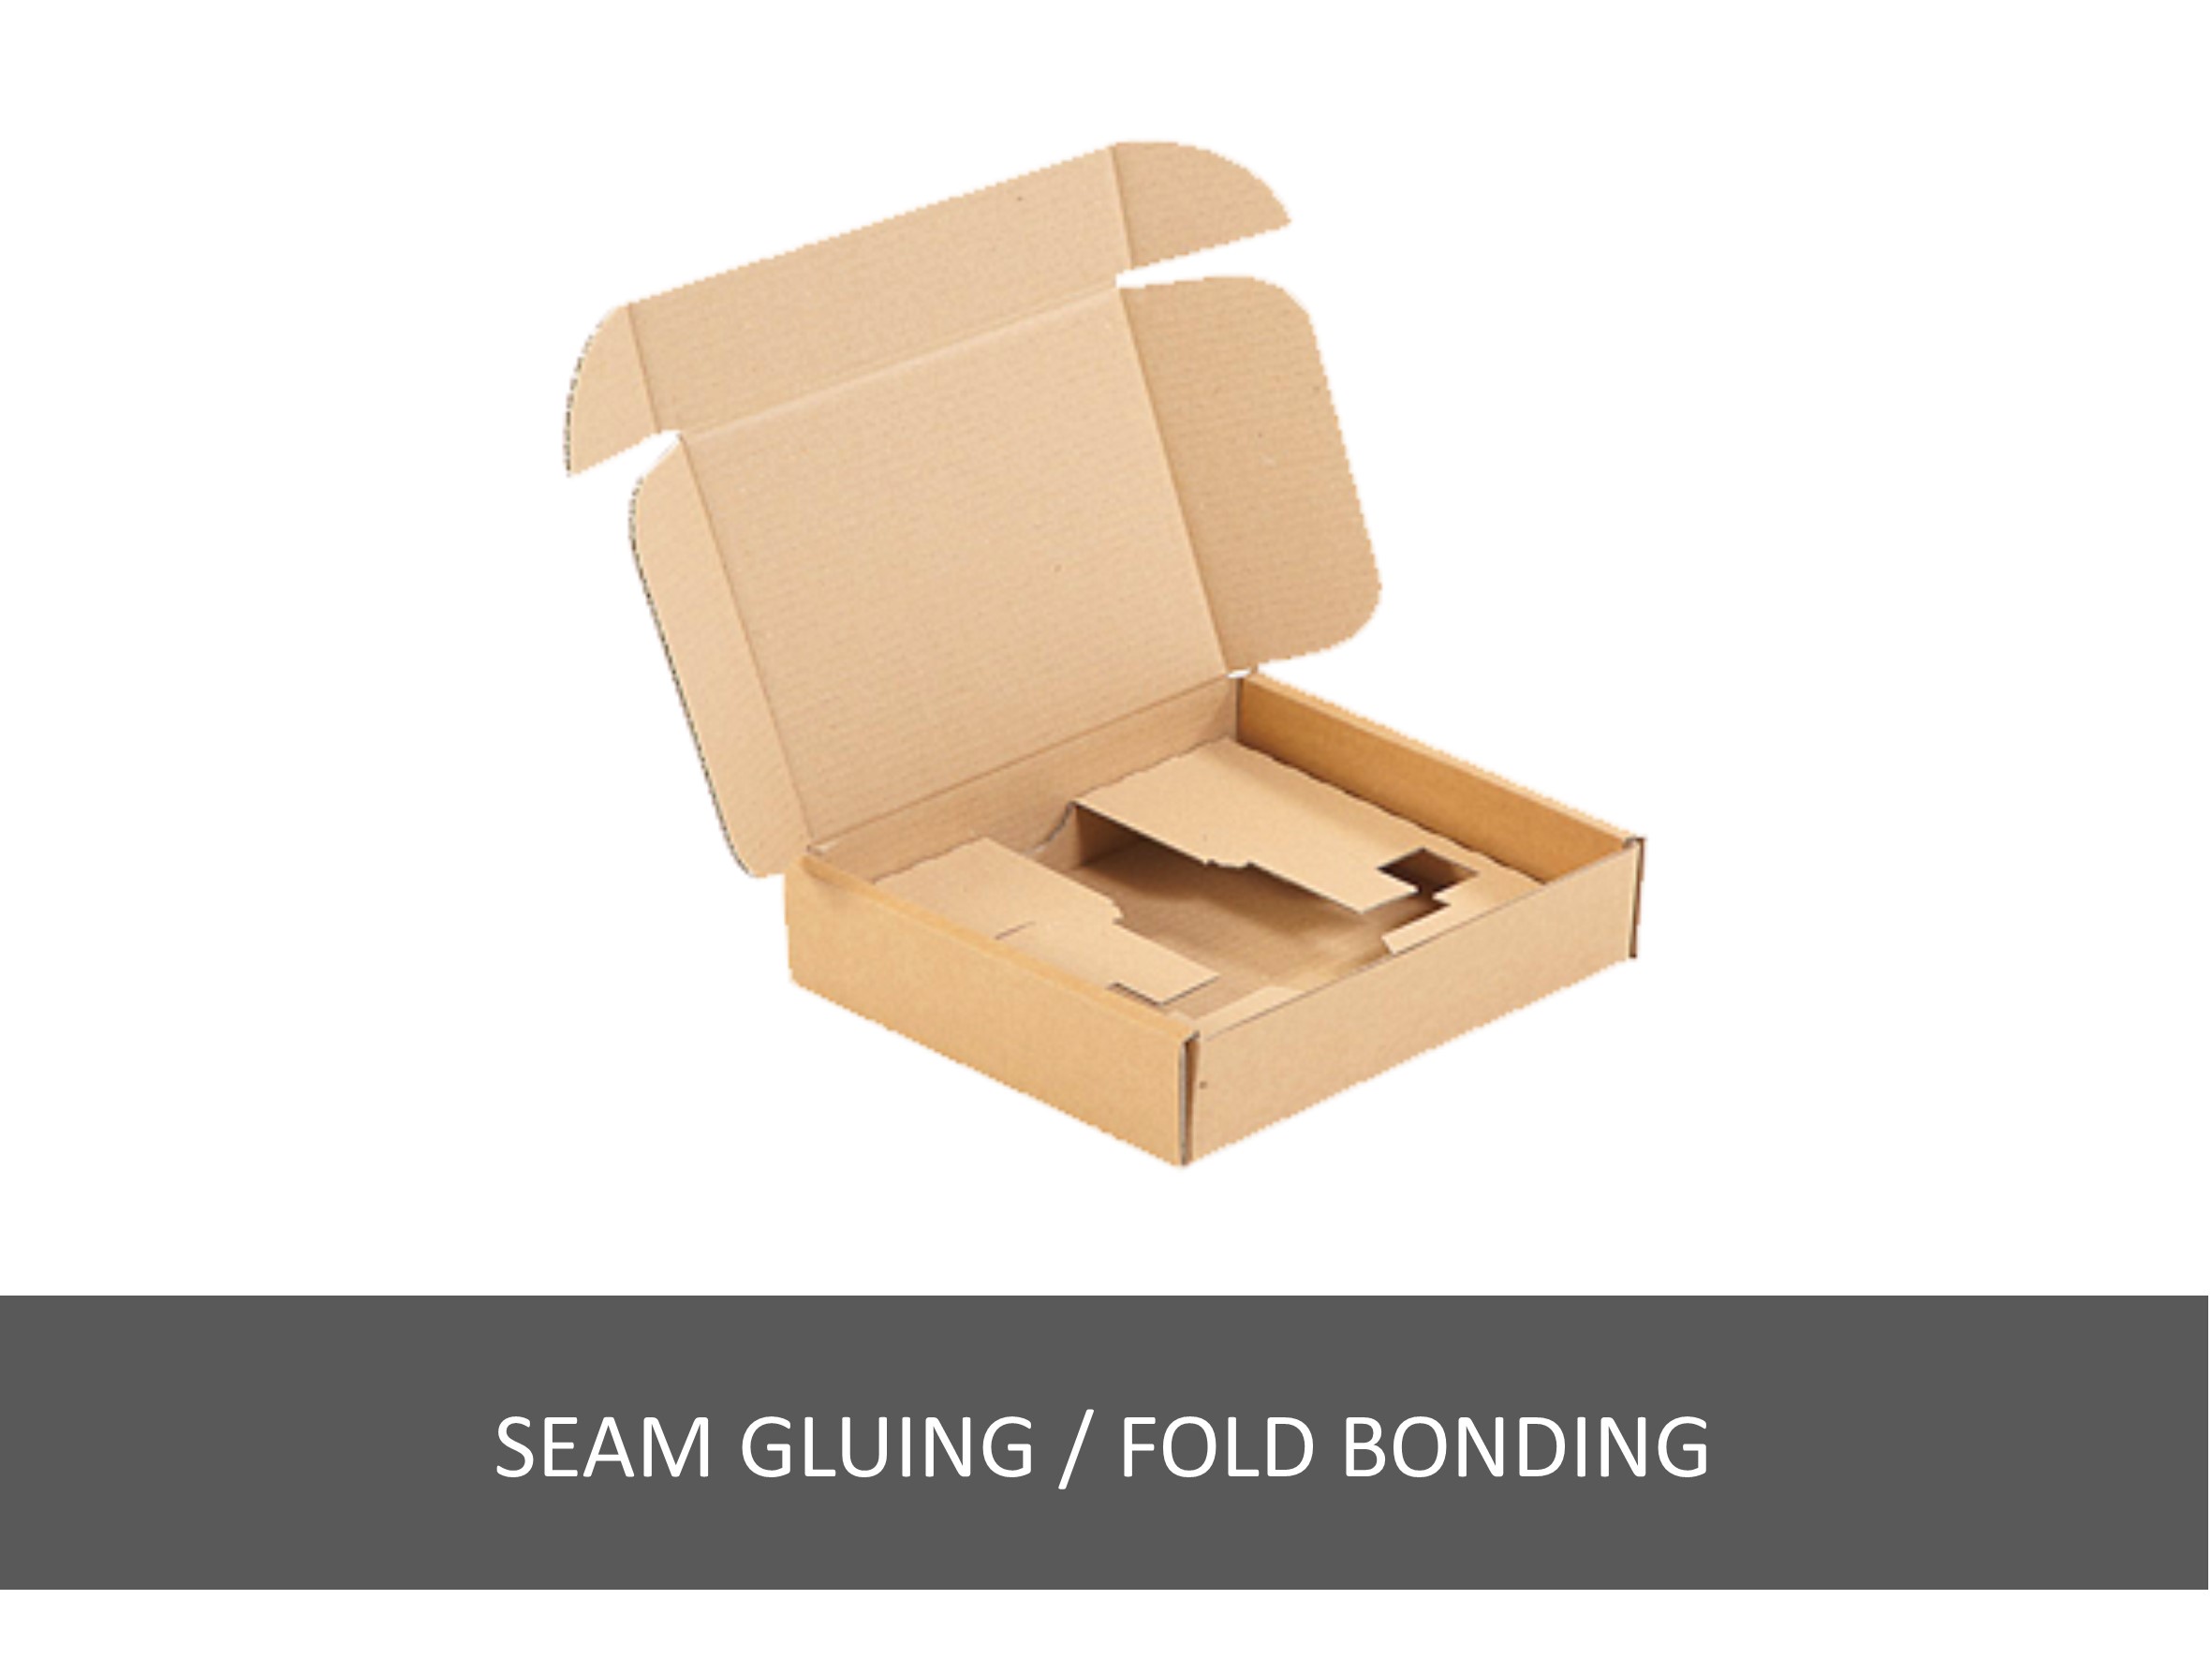 Seam gluing & fold bonding